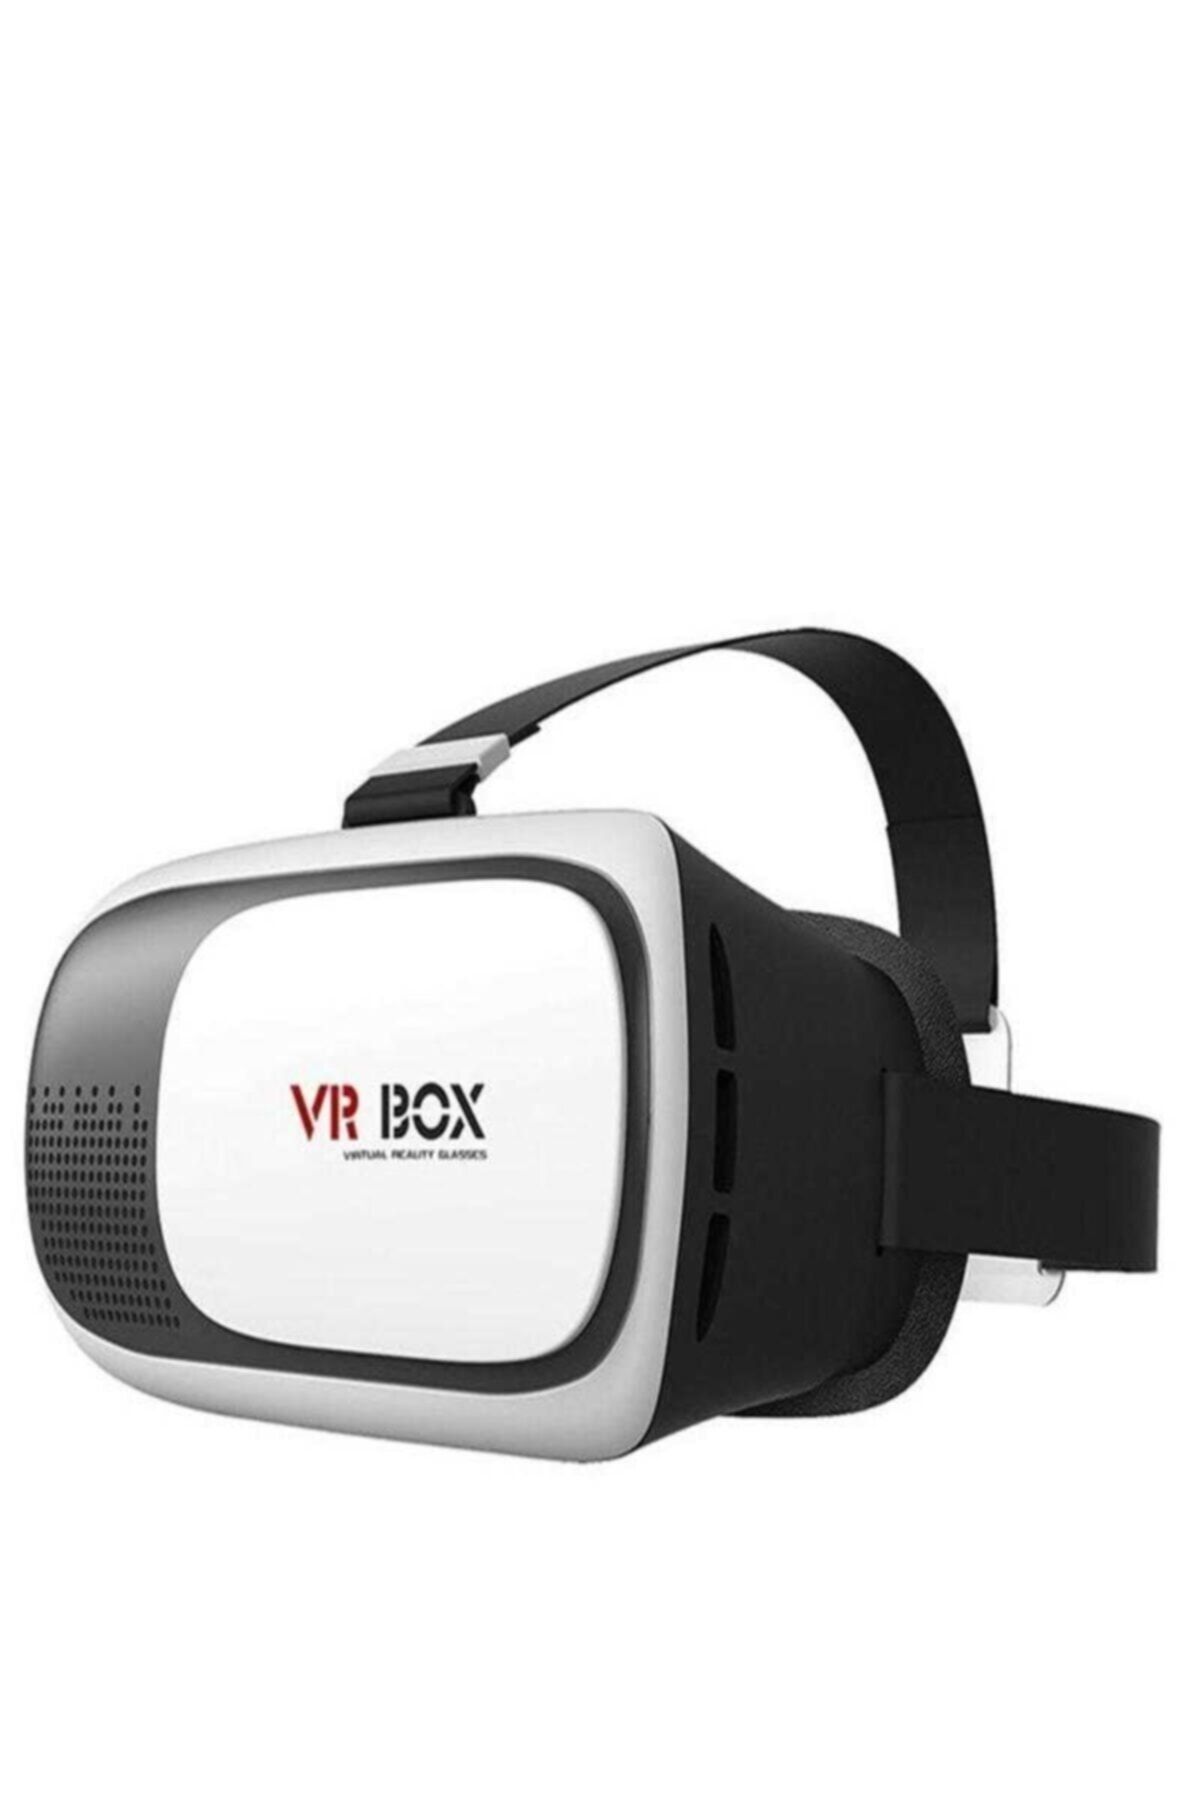 Vr Box VRBOX VR BOX 3D Virtual Reality Sanal Gerçeklik Gözlüğü